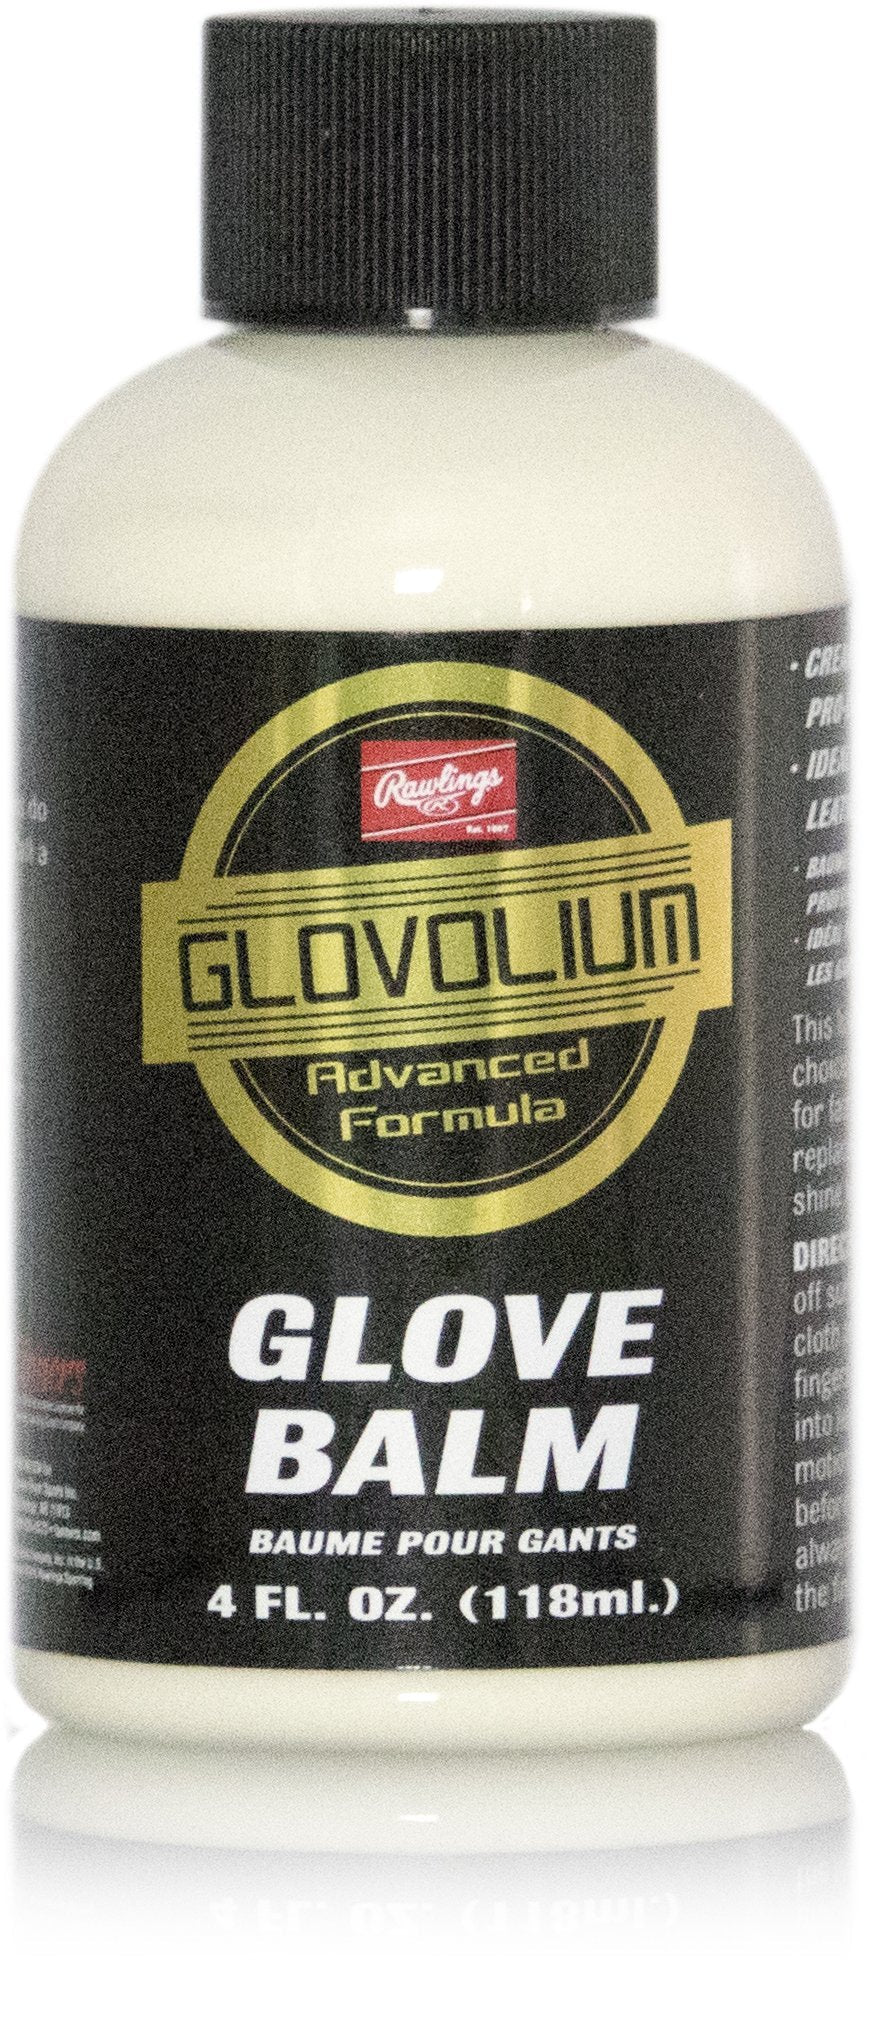 [AUSTRALIA] - Rawlings GLVBALM Glovolium Glove Balm with Display Pack 